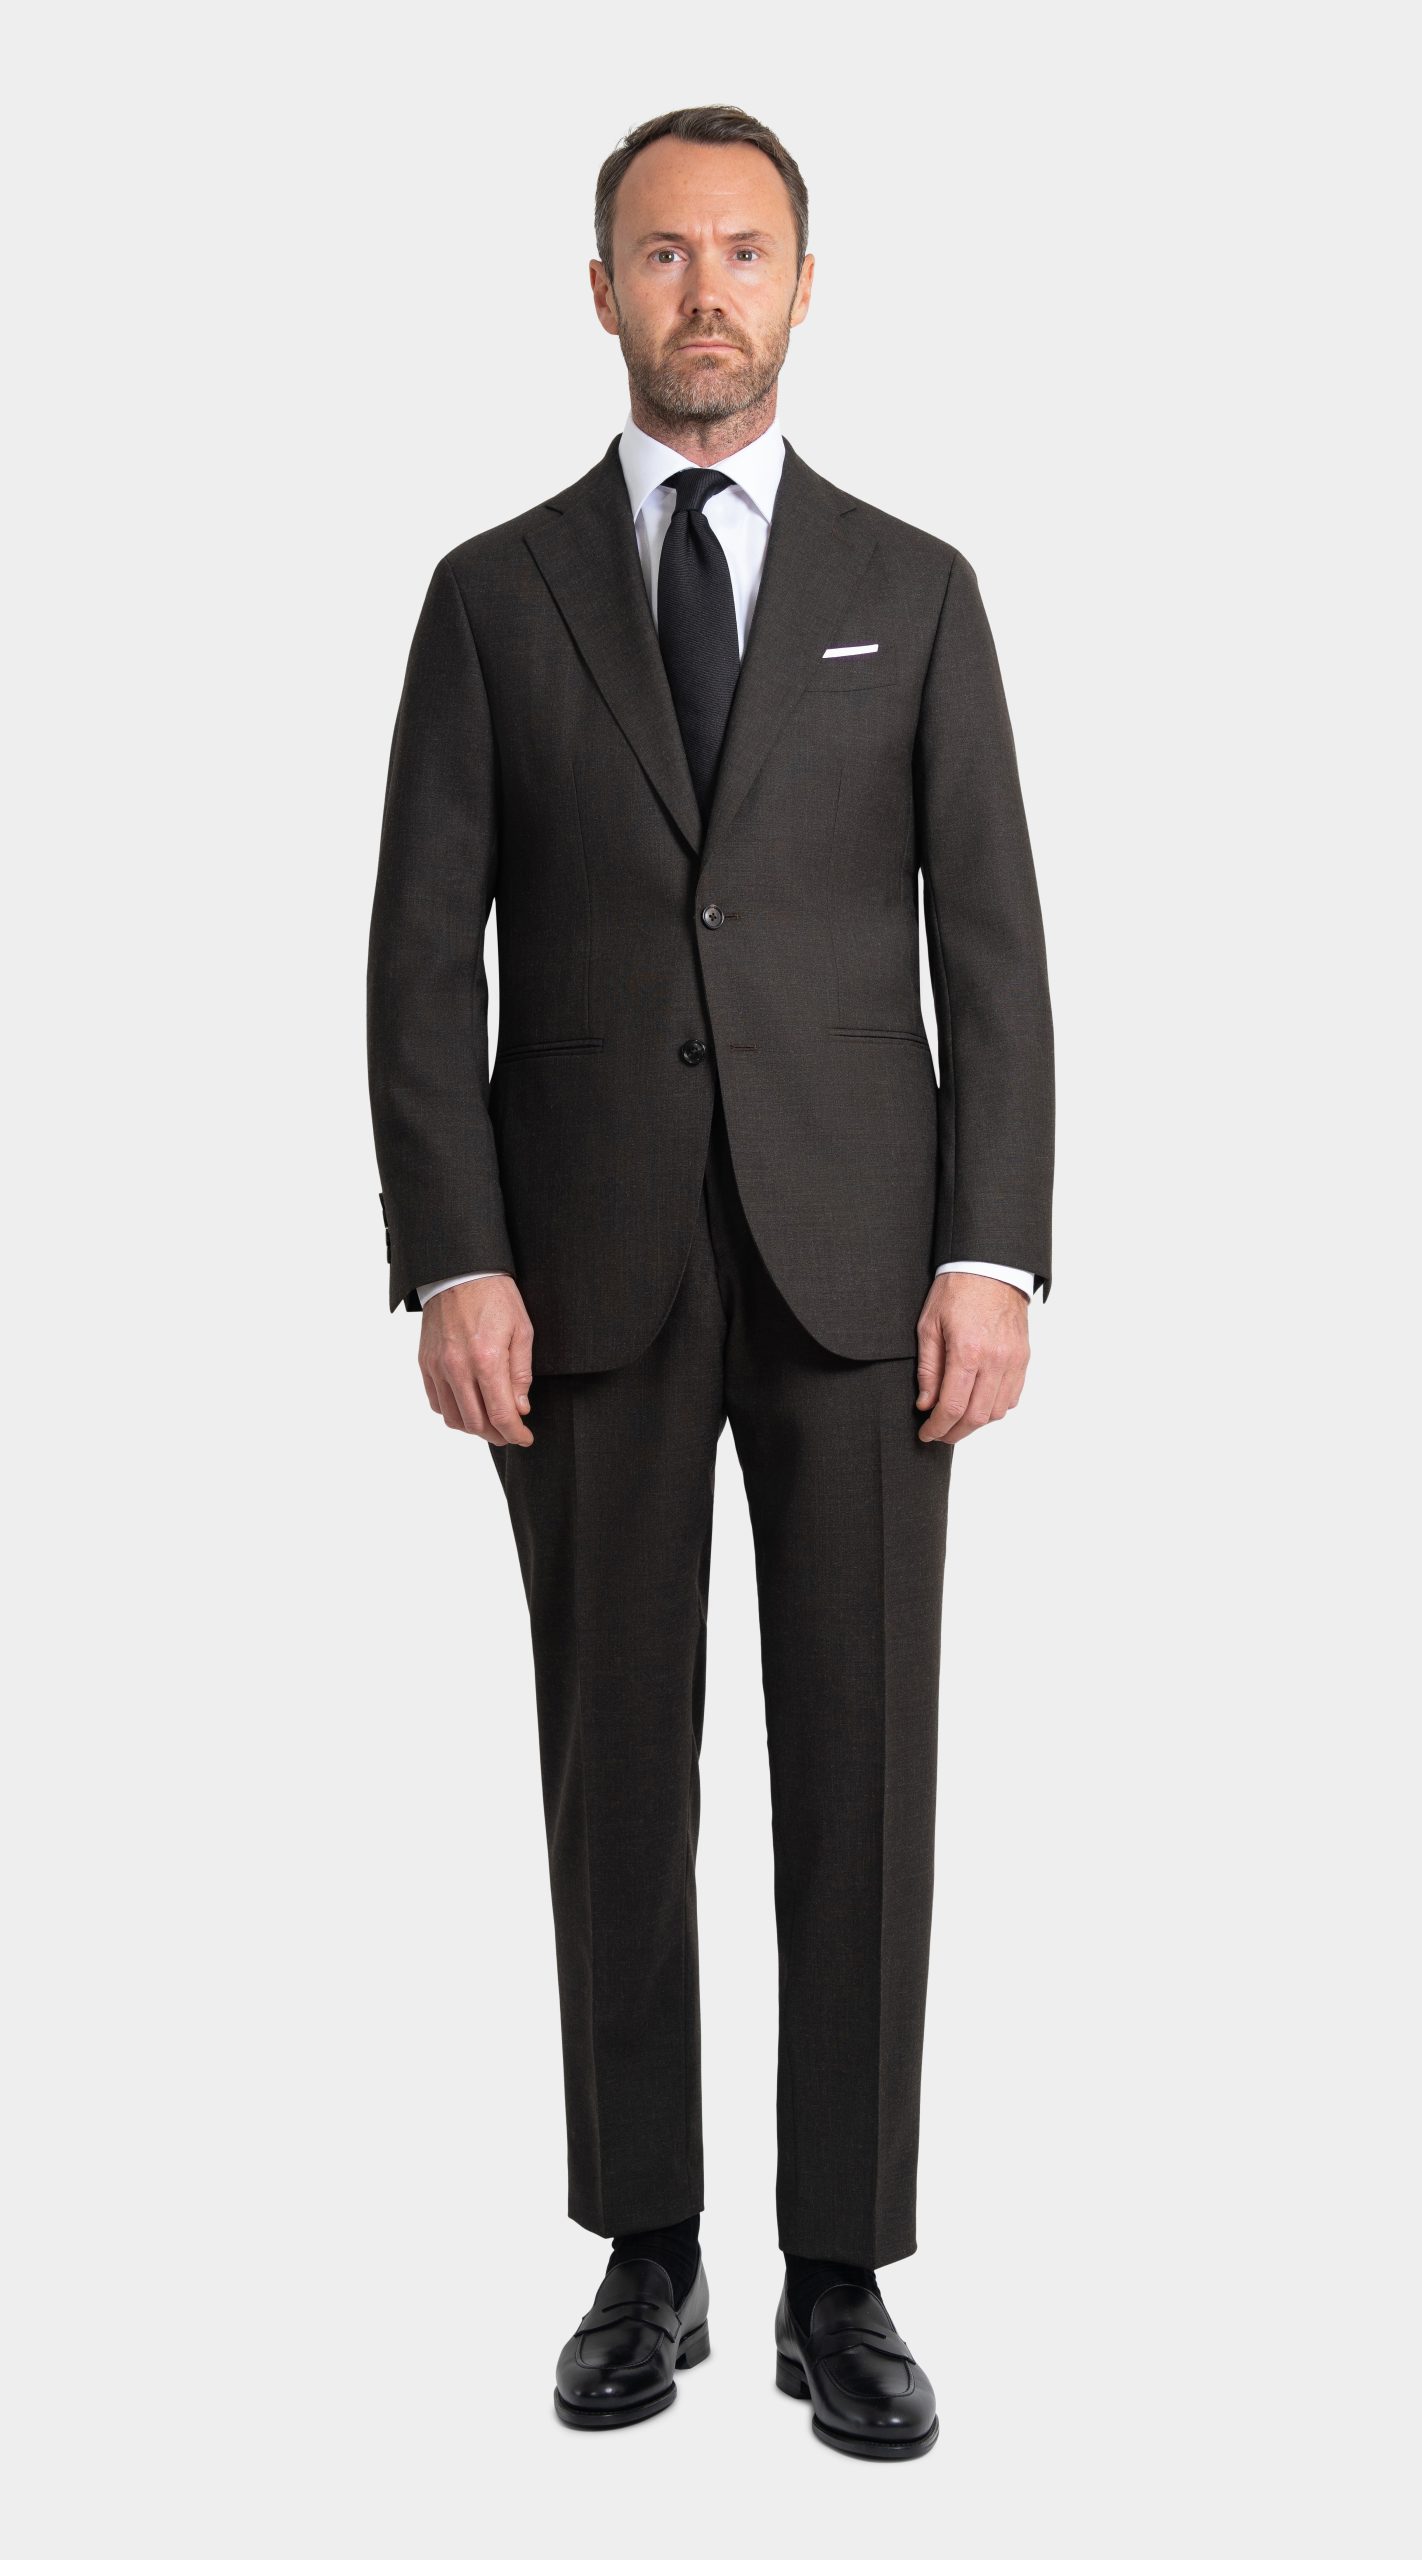 custom brown suit in twistair, with black shoes